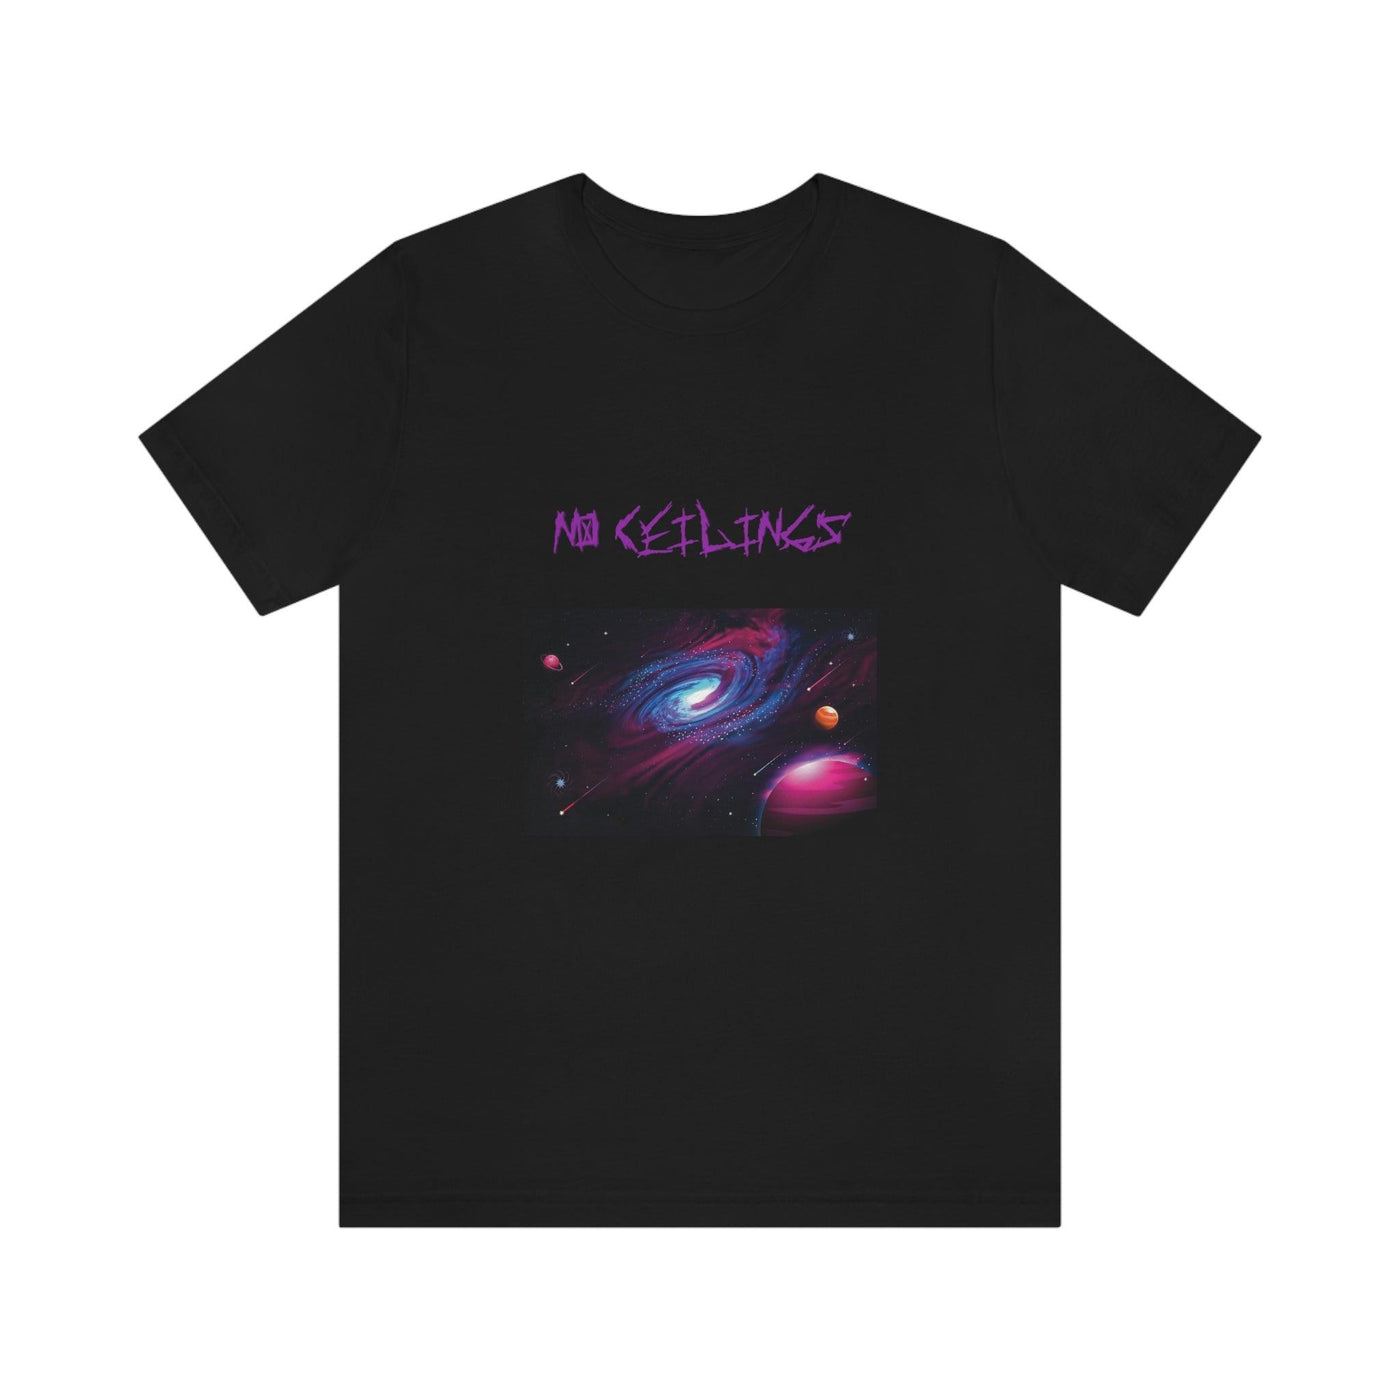 Galaxy Noceilings Shirt Unisex Jersey Short Sleeve Tee - NoCeilingsClothing